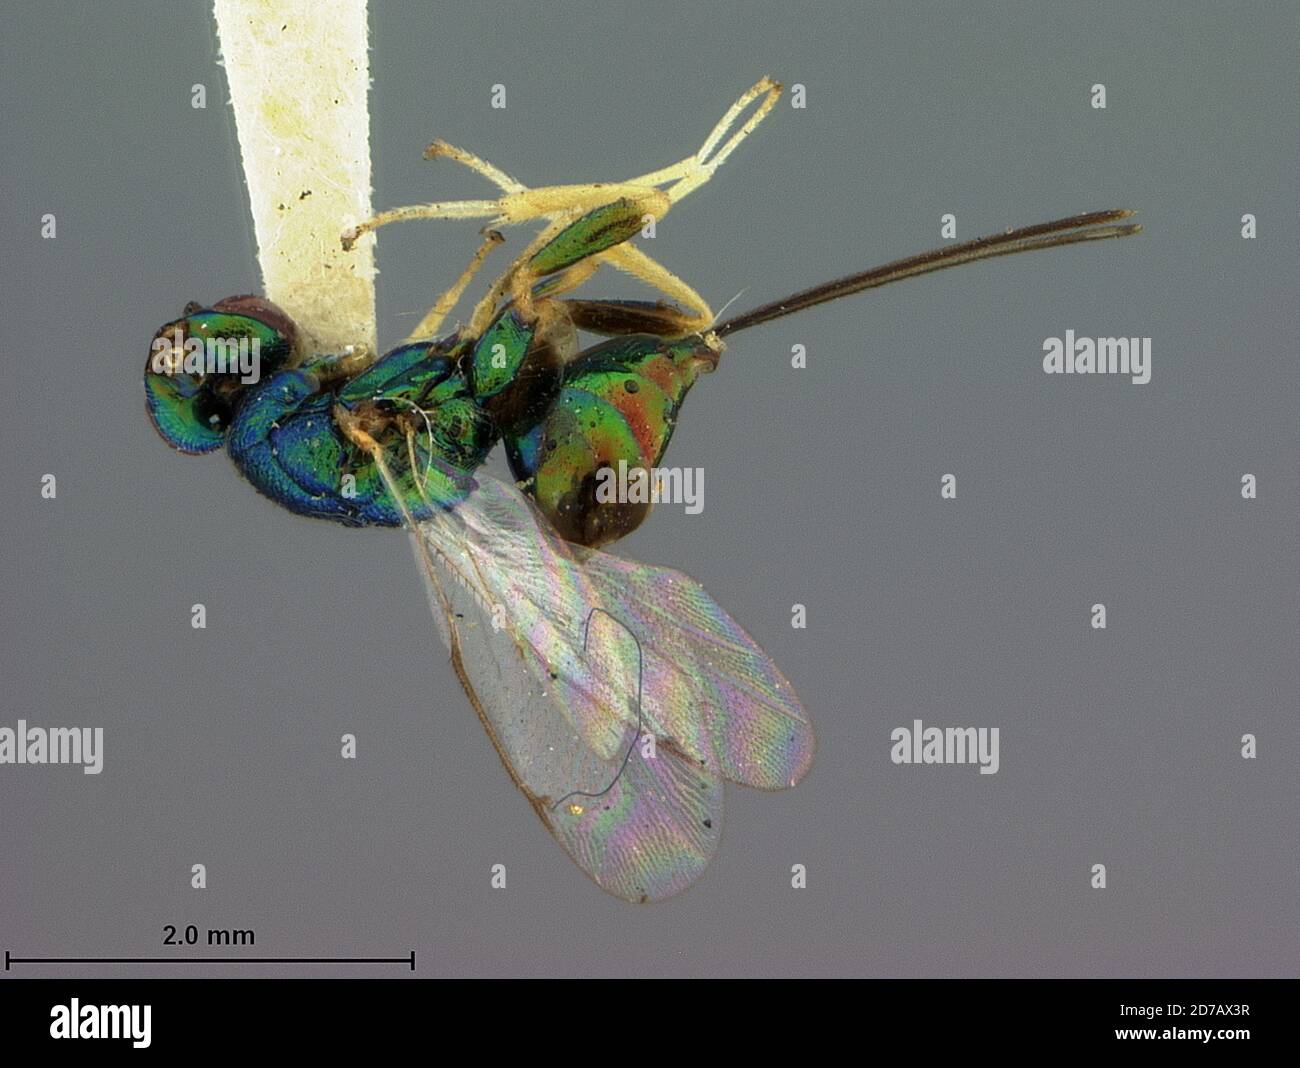 Sydney, New South Wales, Australia, Torymus eucalypti Ashmead, 1900, Animalia, Arthropoda, Insecta, Hymenoptera, Torymidae Stock Photo